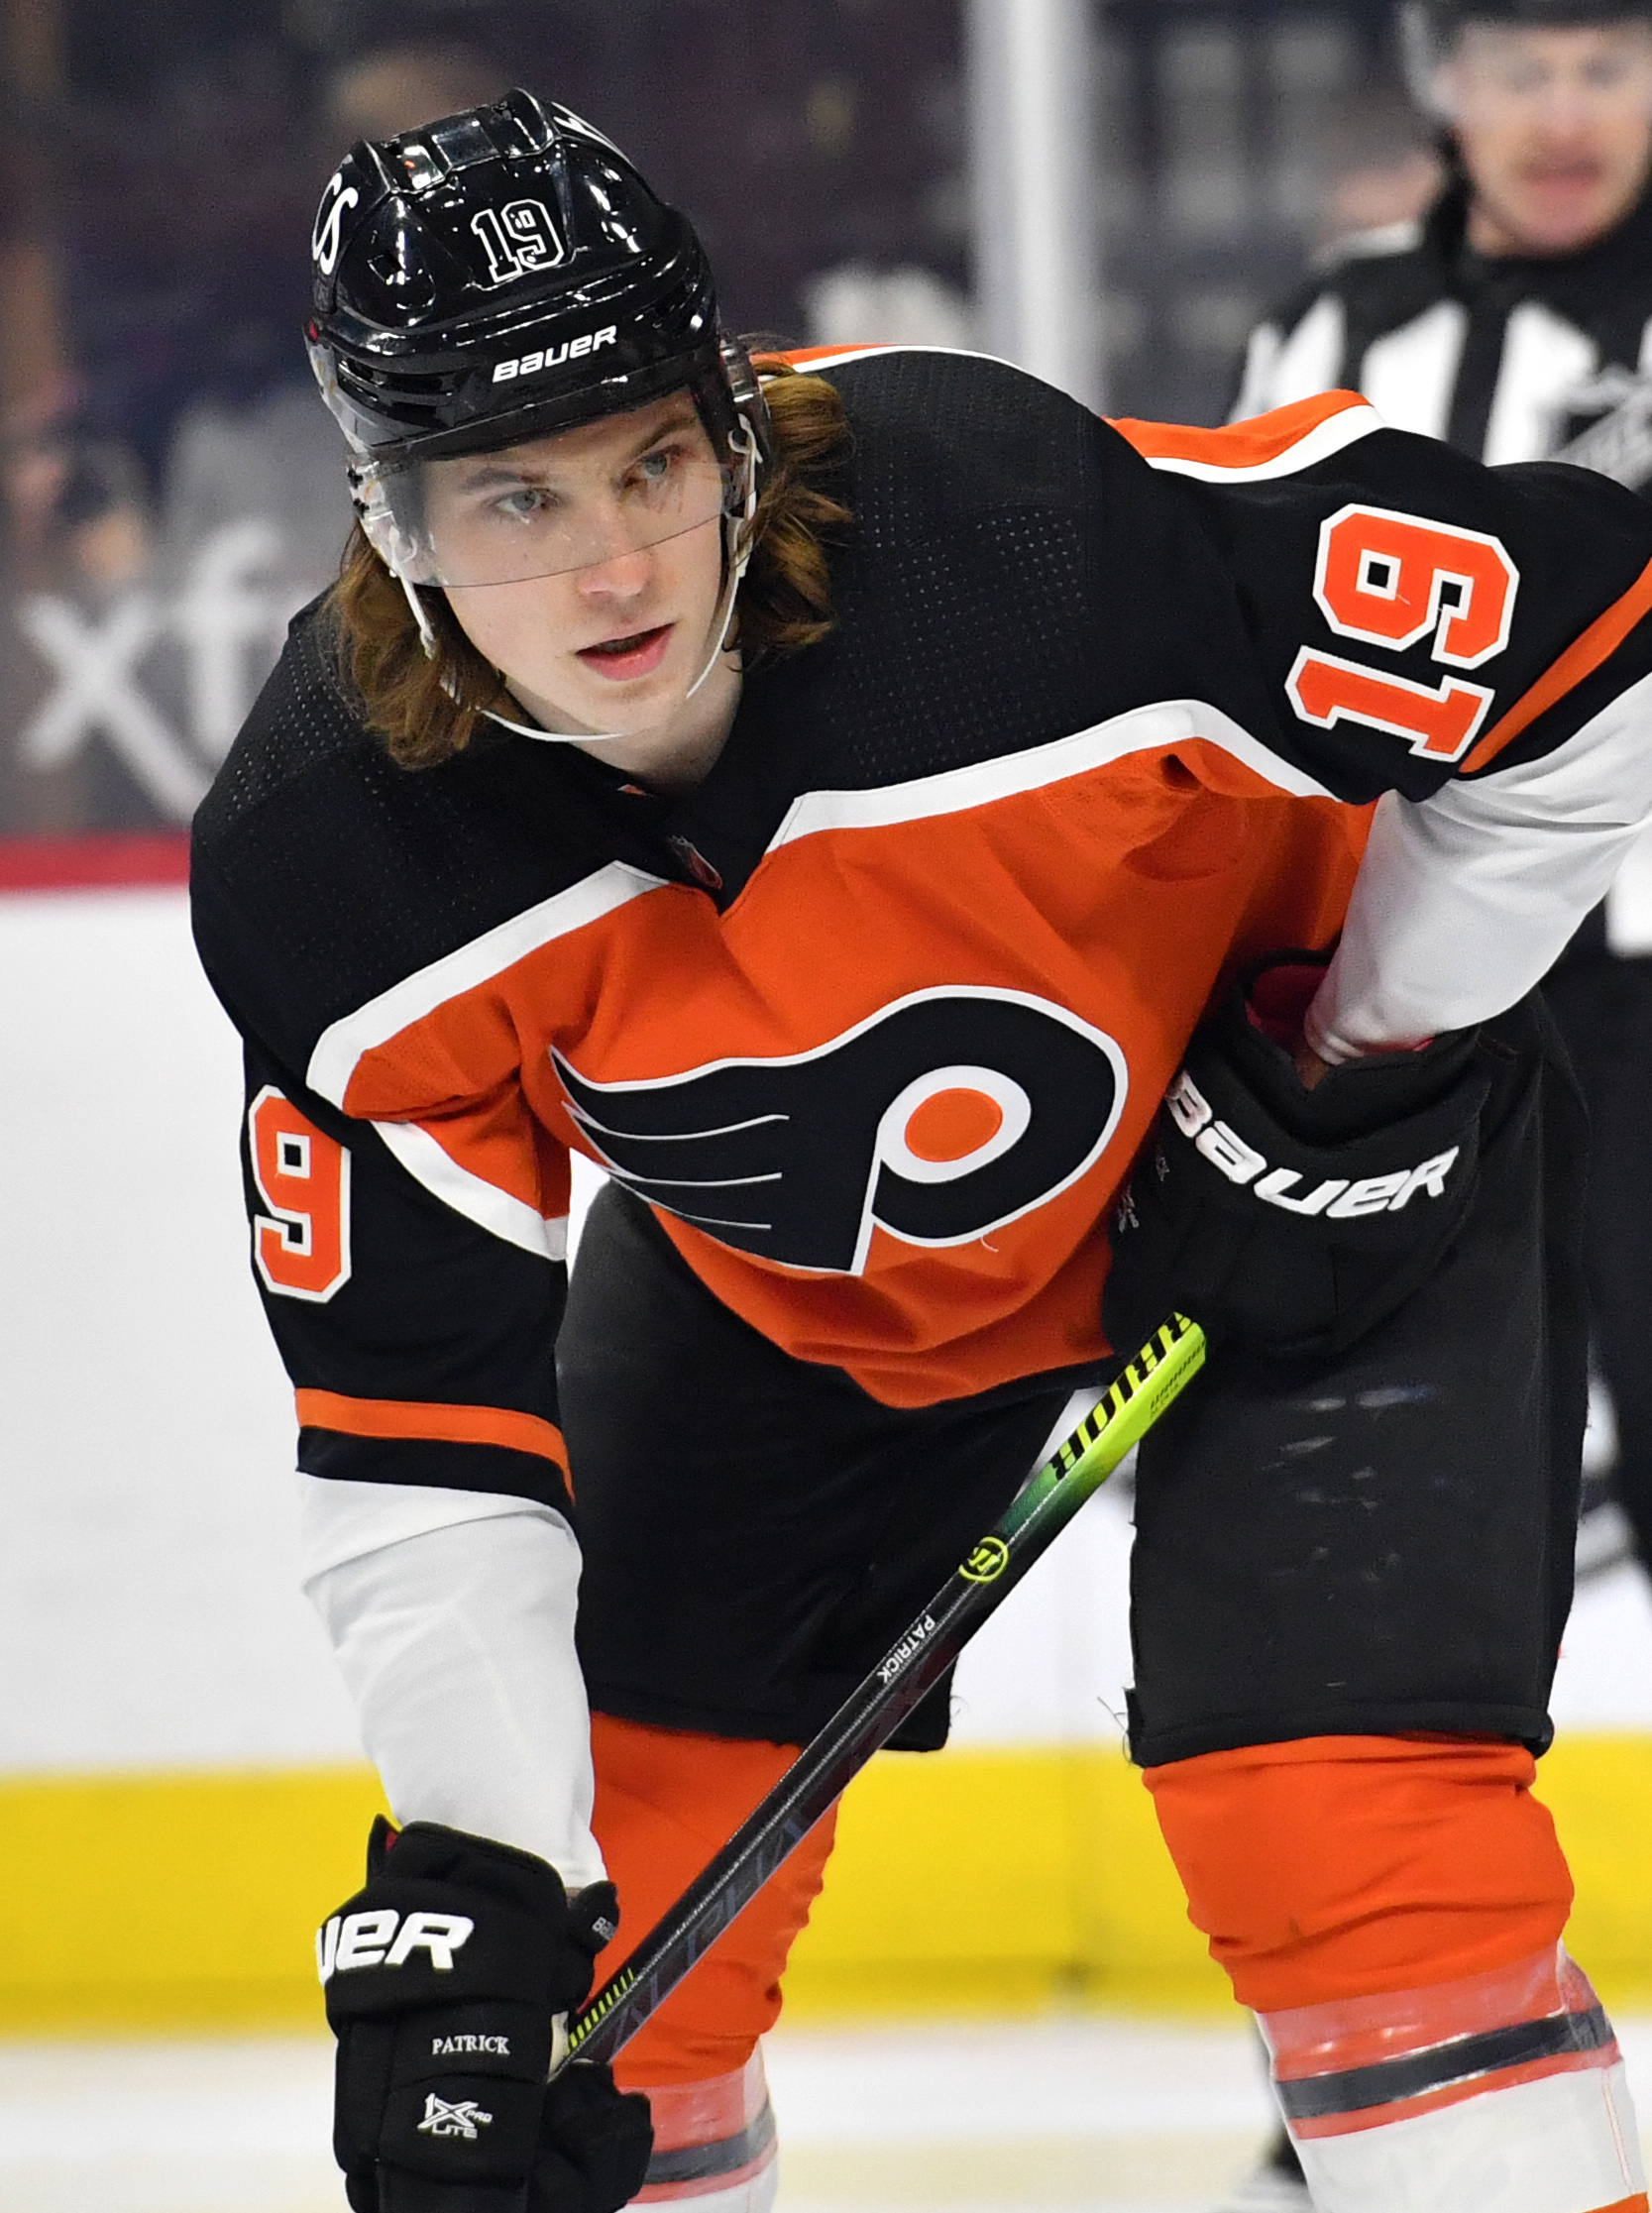 Nolan Patrick injured as Flyers fall to Ducks